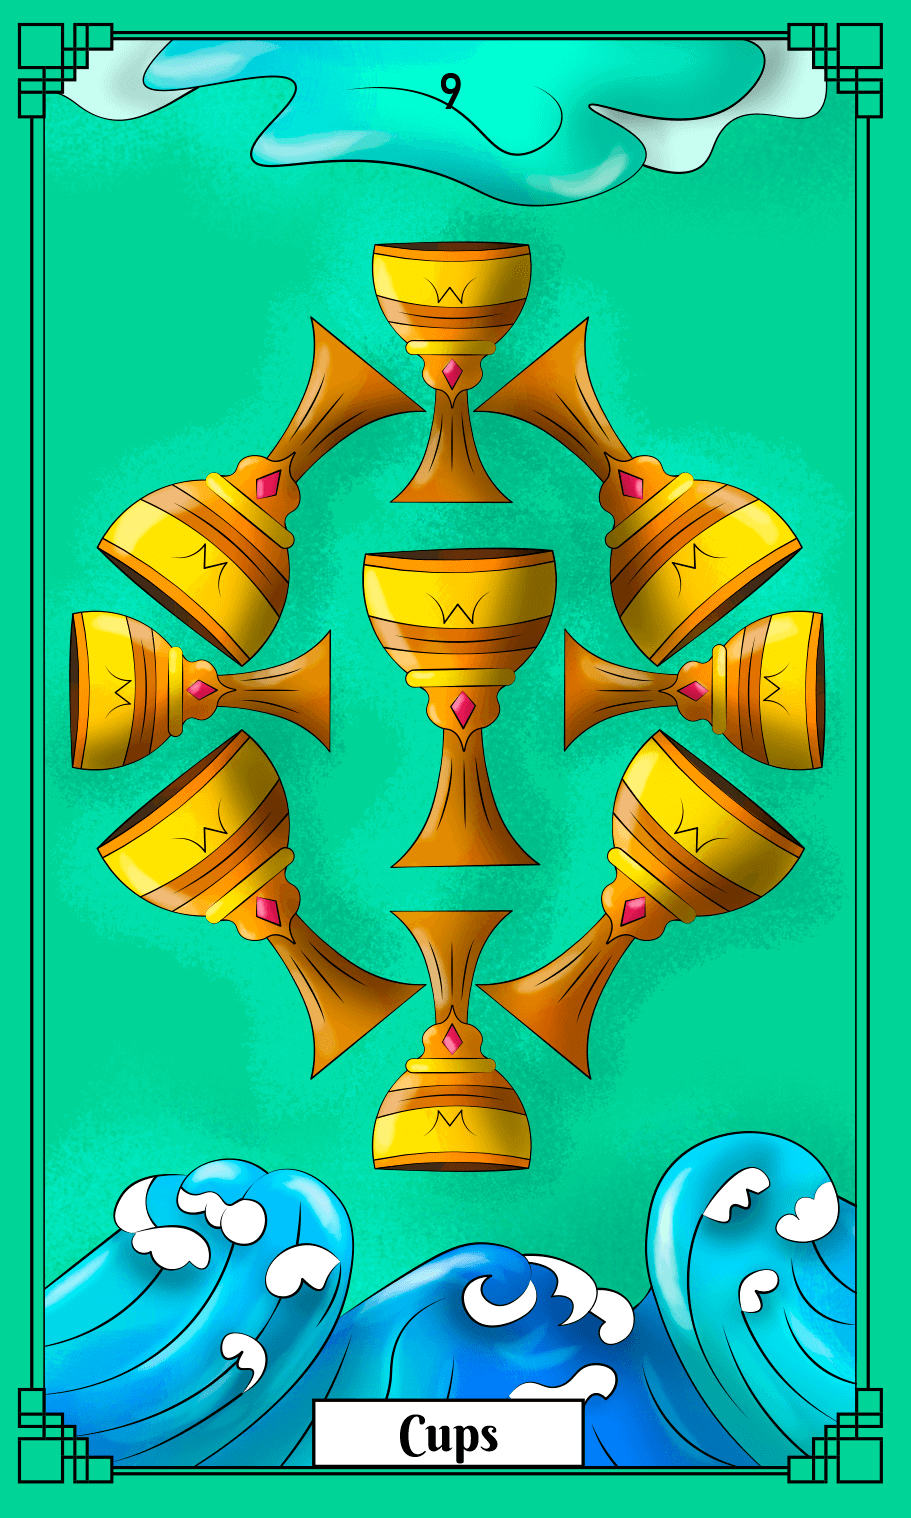 Nine of cups card